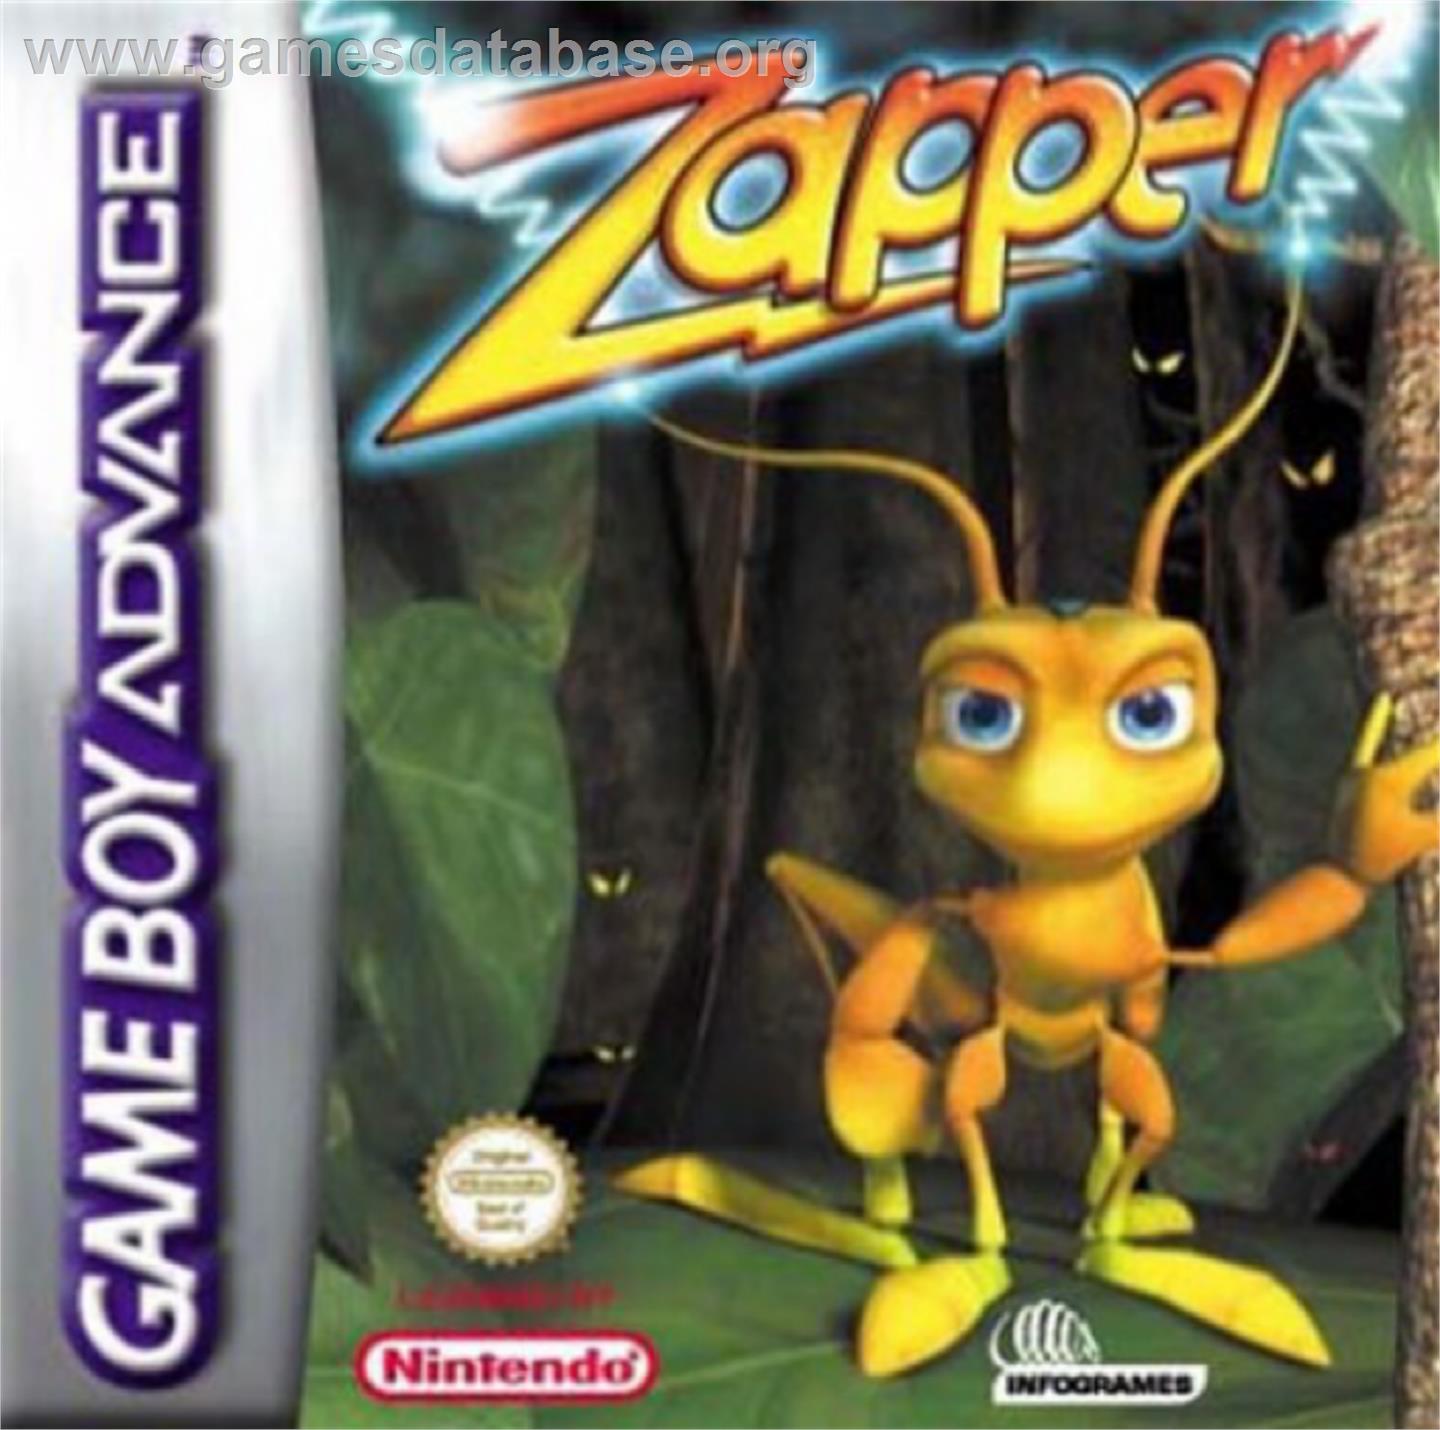 Zapper: One Wicked Cricket - Nintendo Game Boy Advance - Artwork - Box